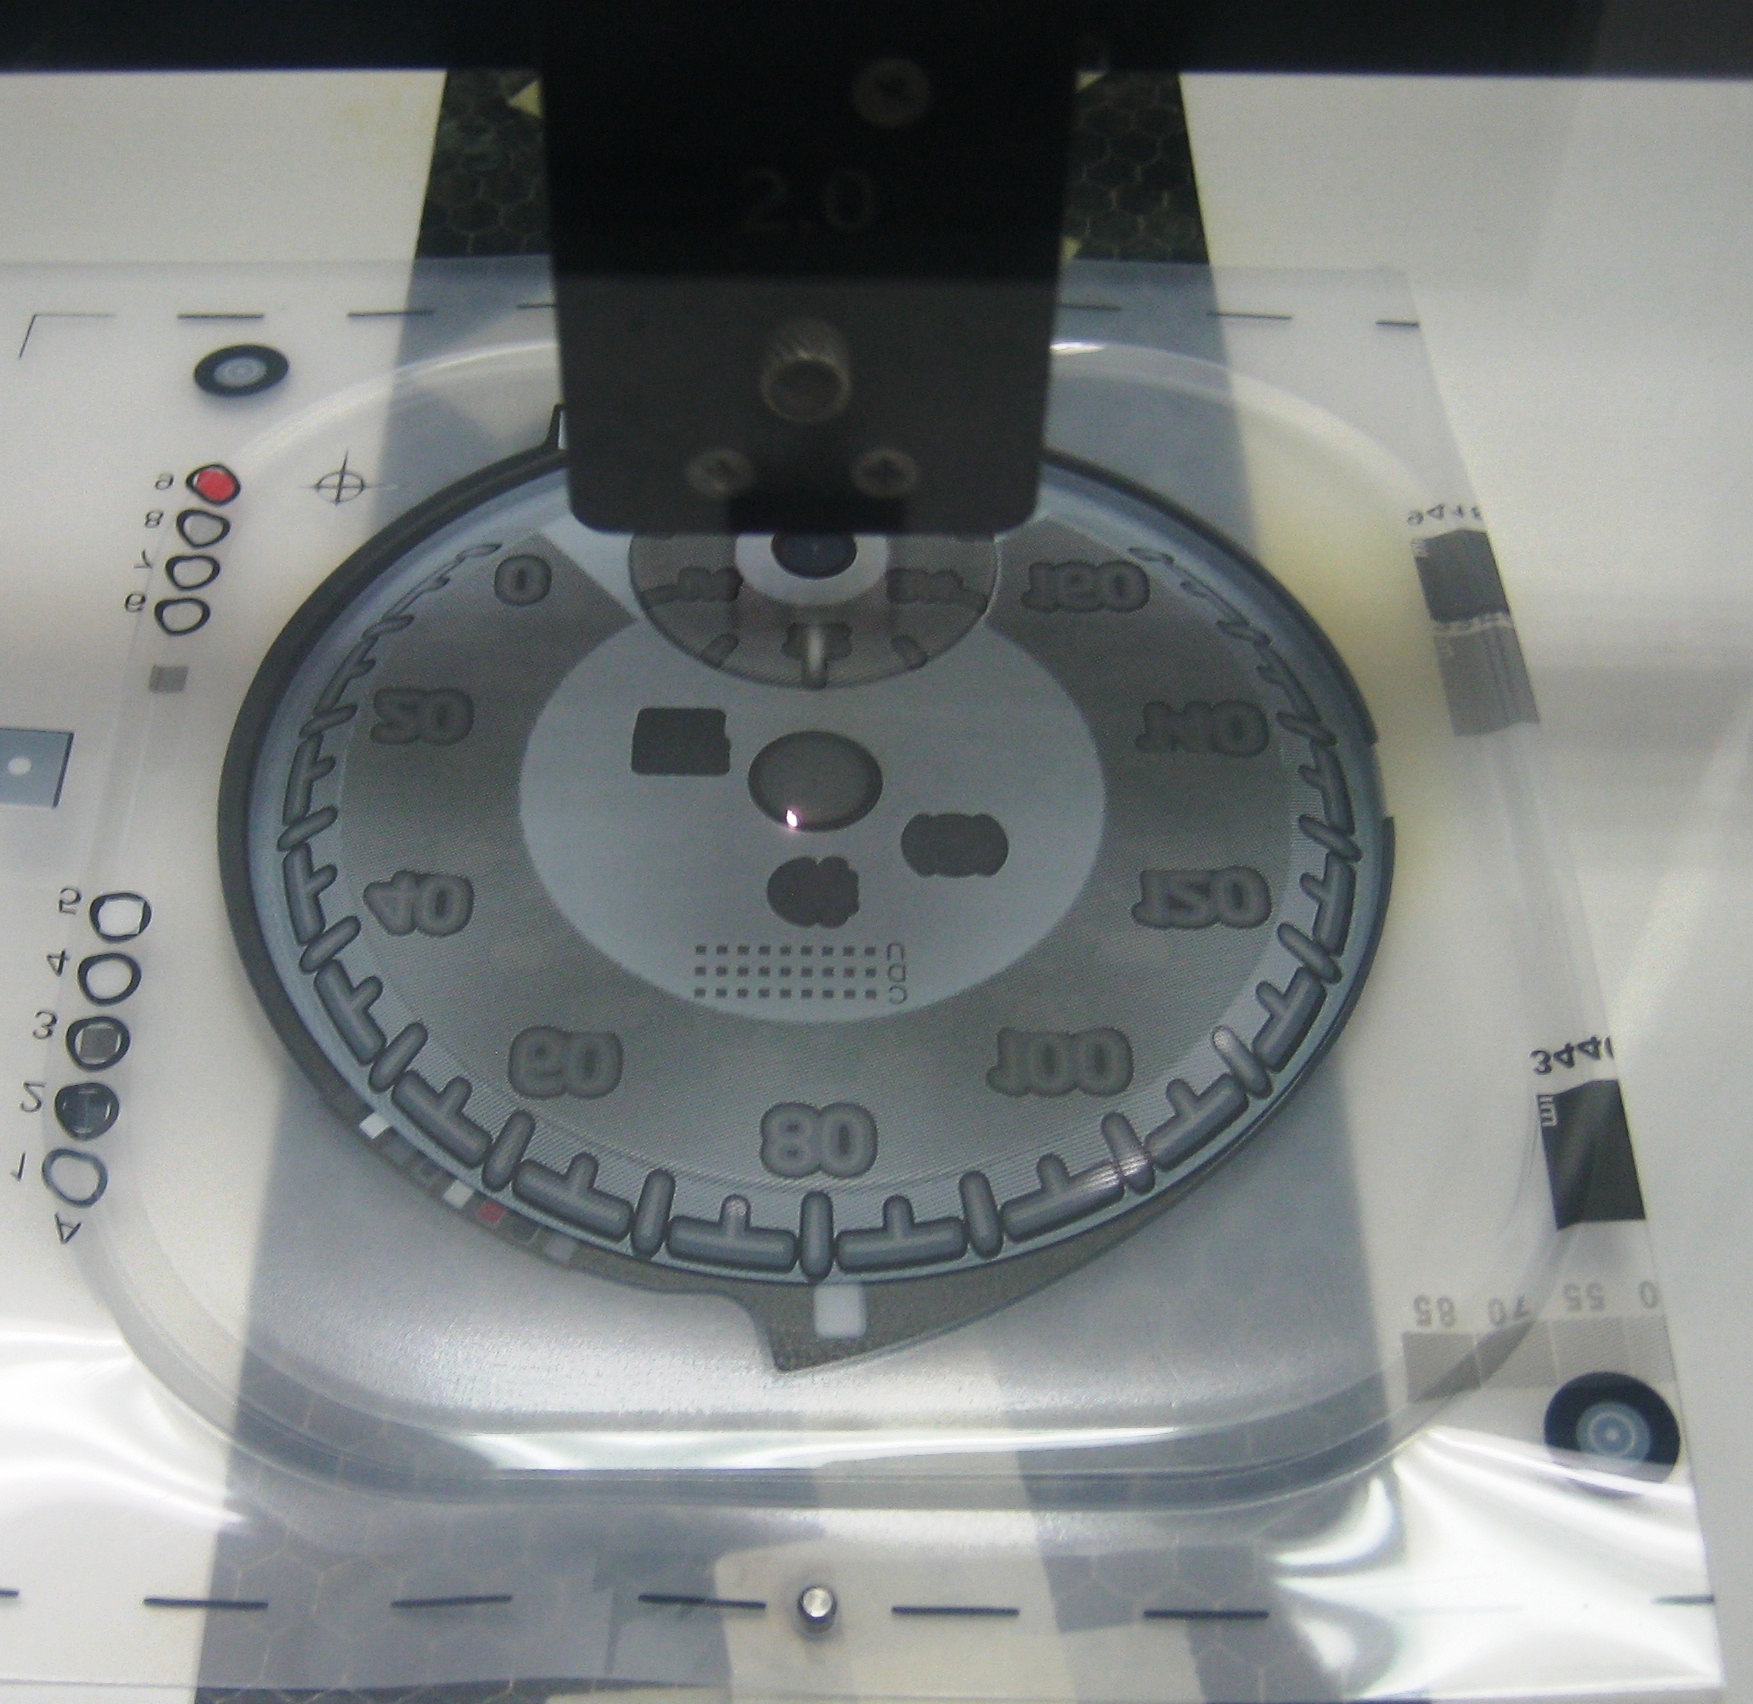 Laser Cutting: VW speedometer